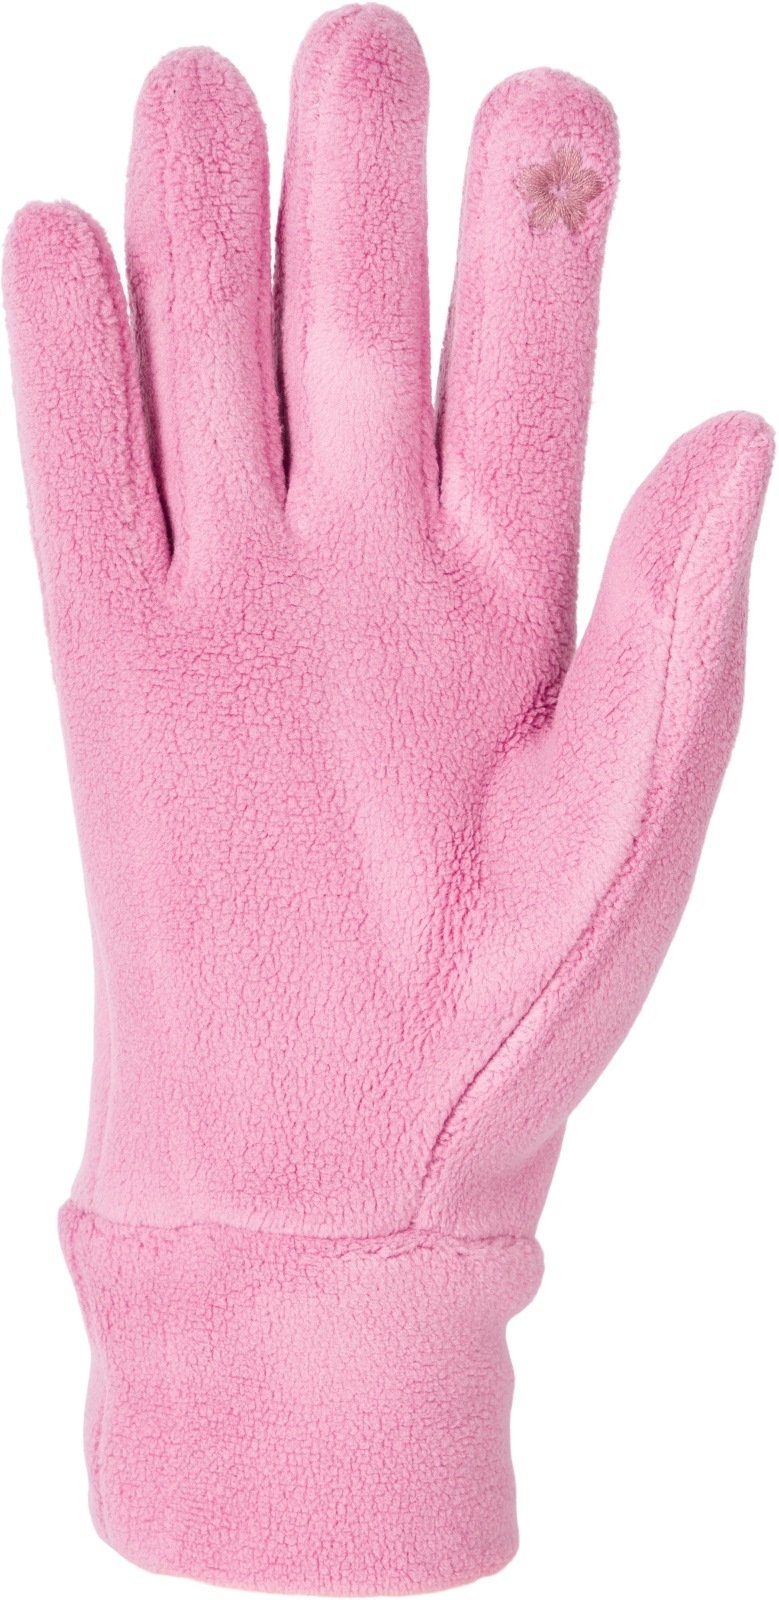 Fleecehandschuhe Einfarbige styleBREAKER Fleece Handschuhe Touchscreen Altrose